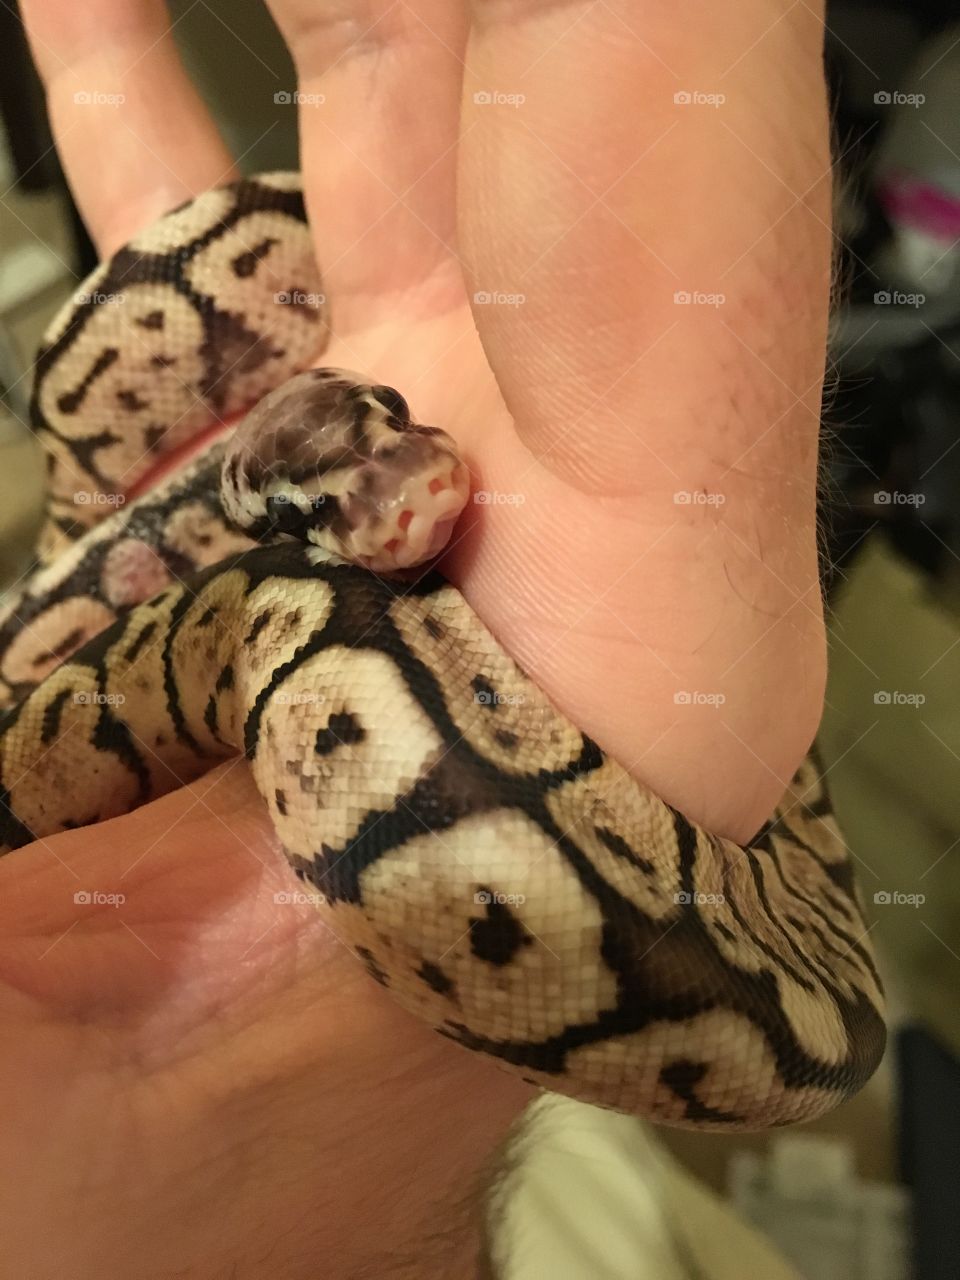 A baby ball python named Goose!